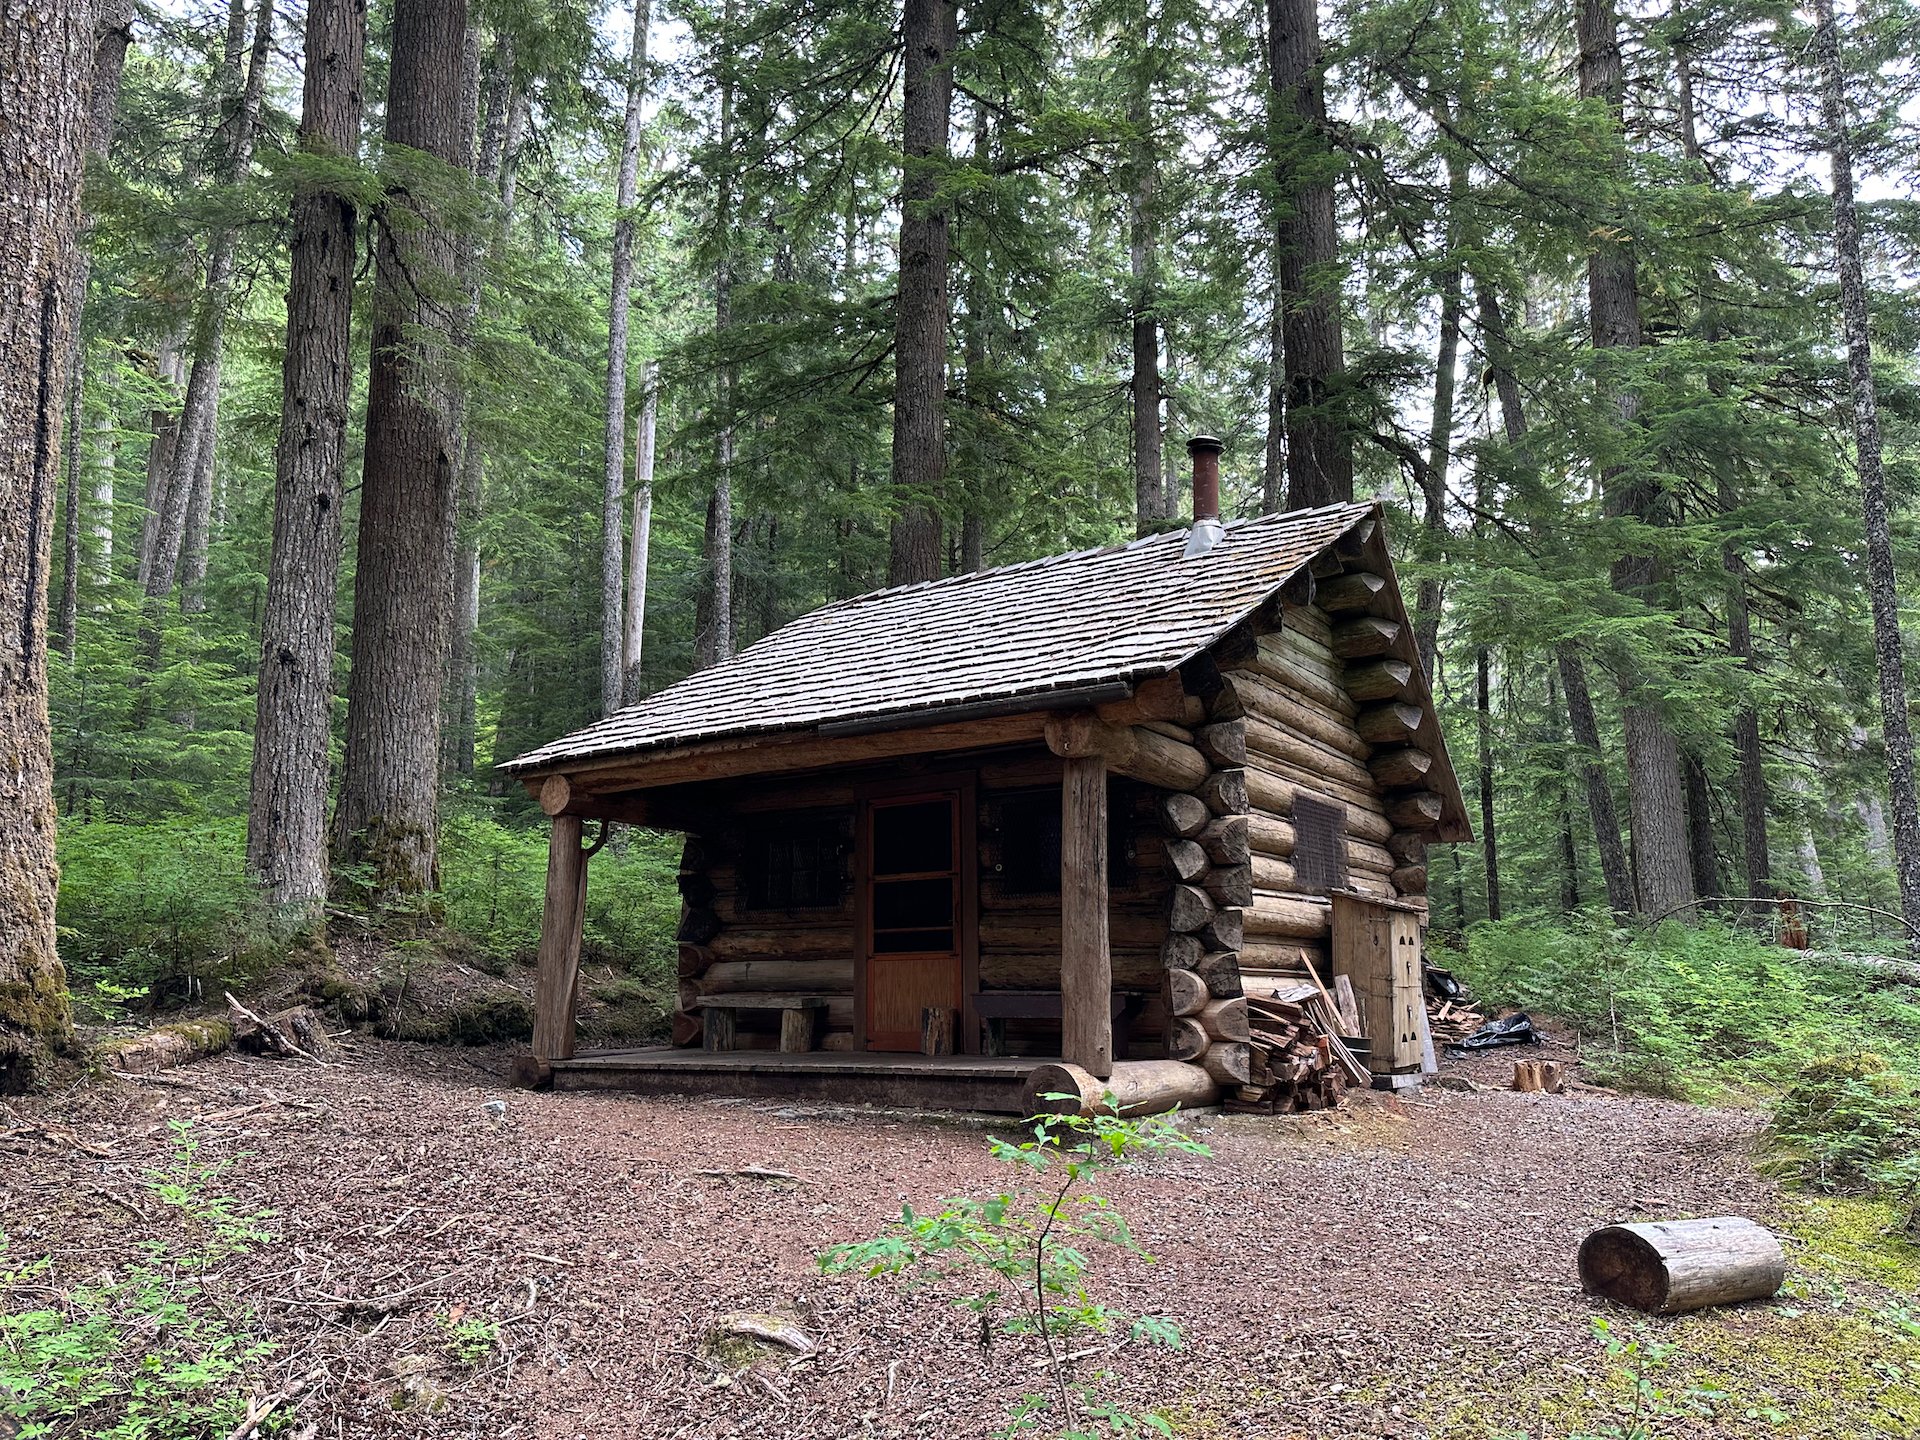  The patrol cabin - beautiful little log cabins.  